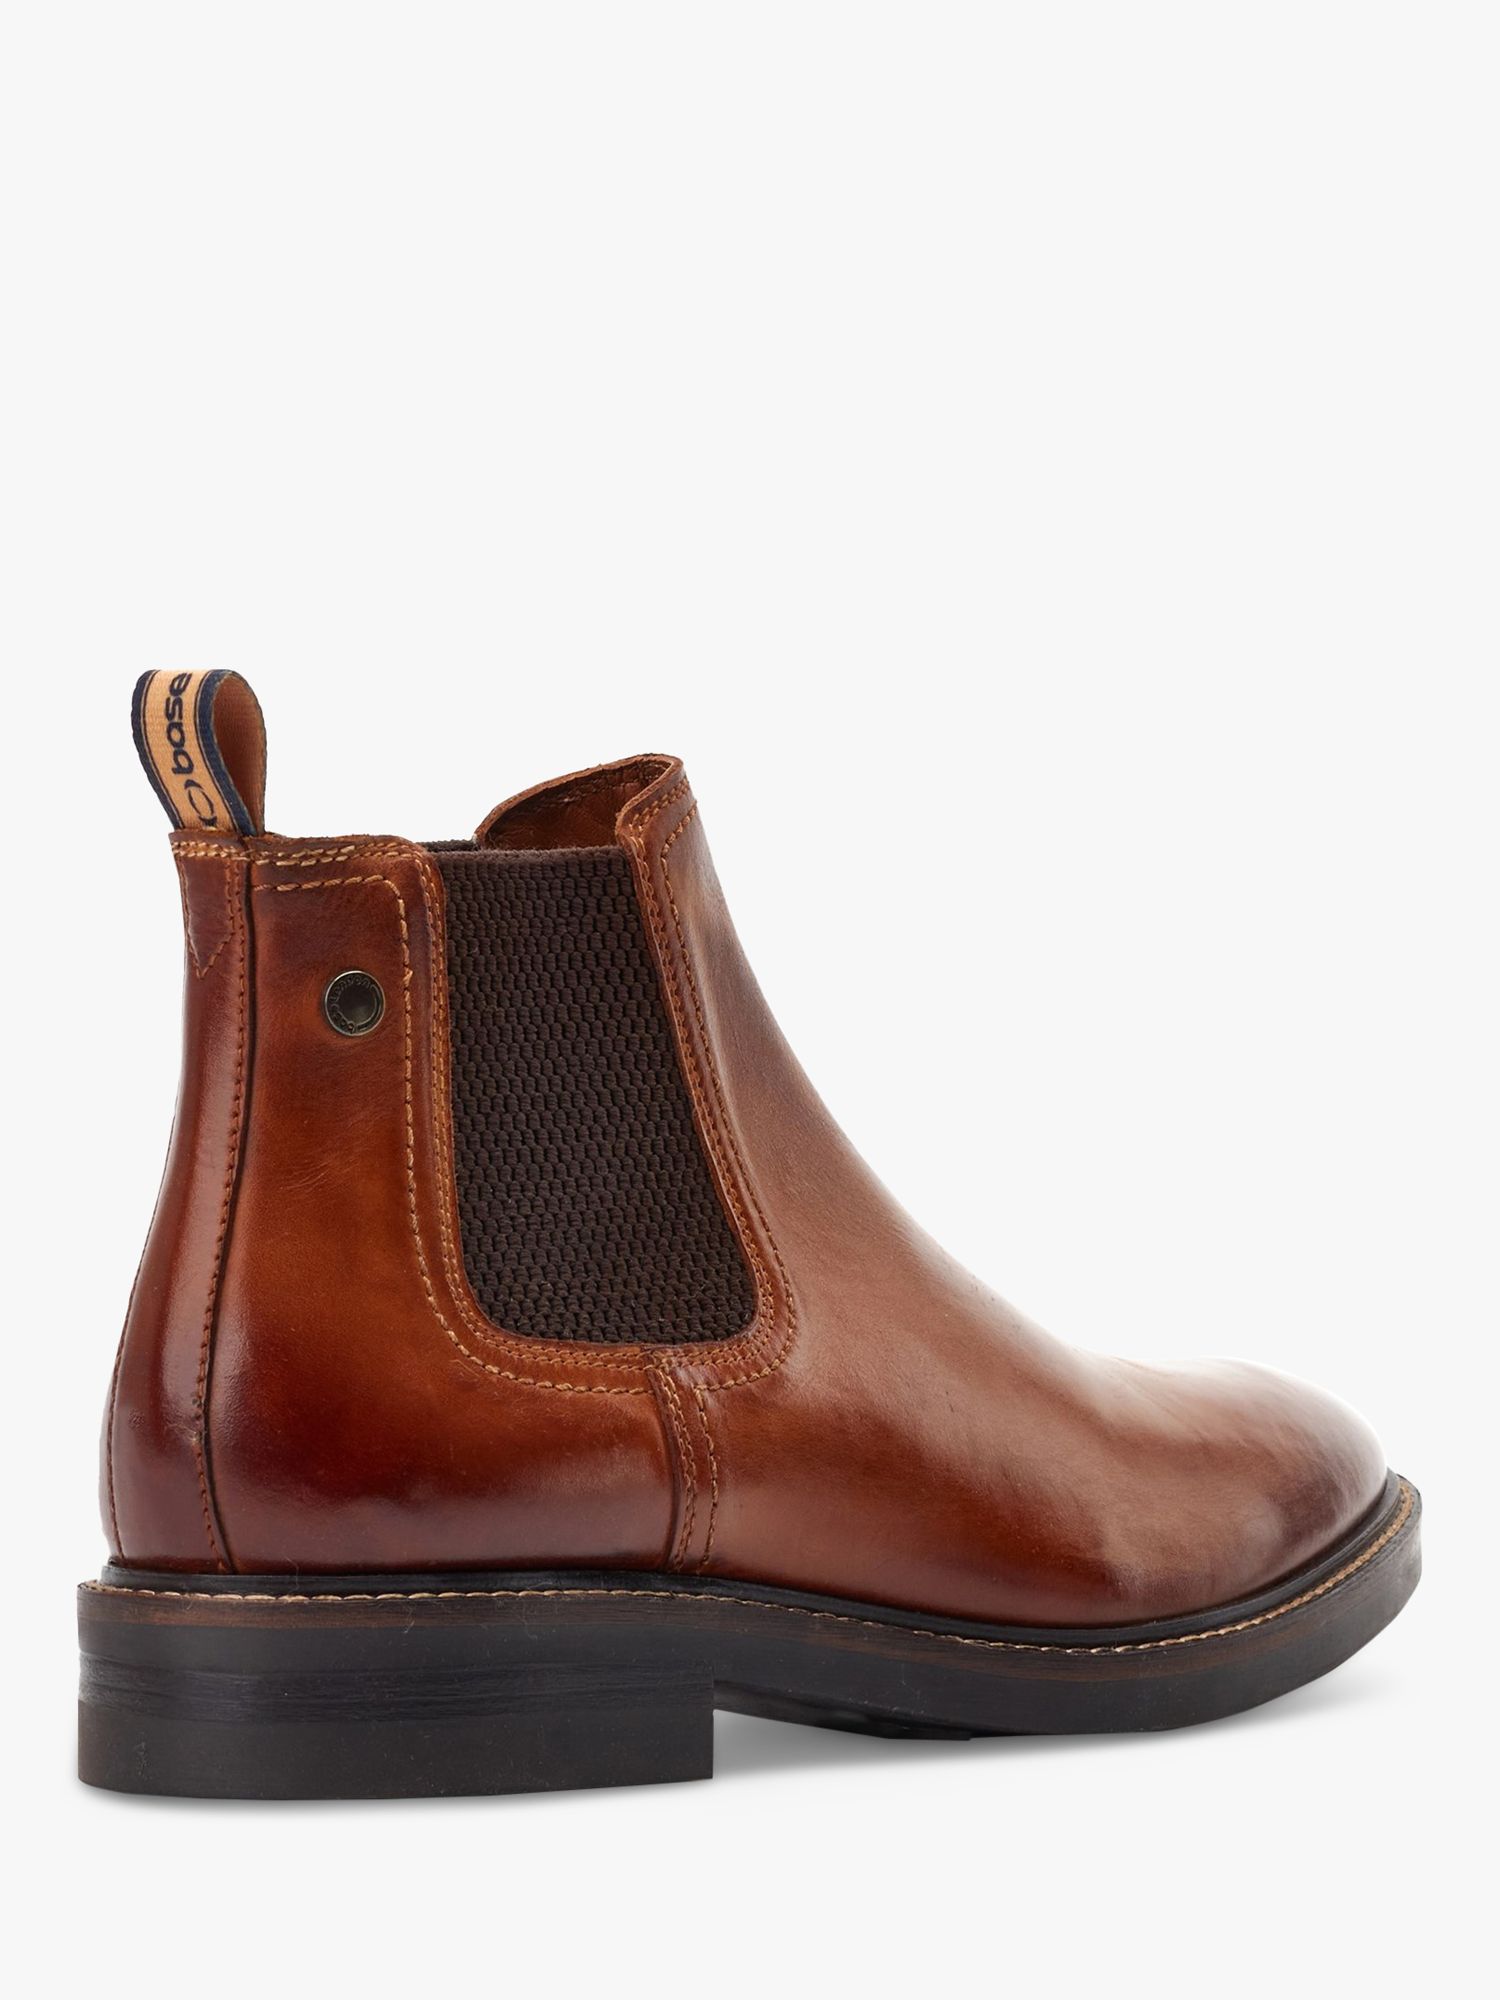 Buy Base London Portland Leather Chelsea Boots Online at johnlewis.com